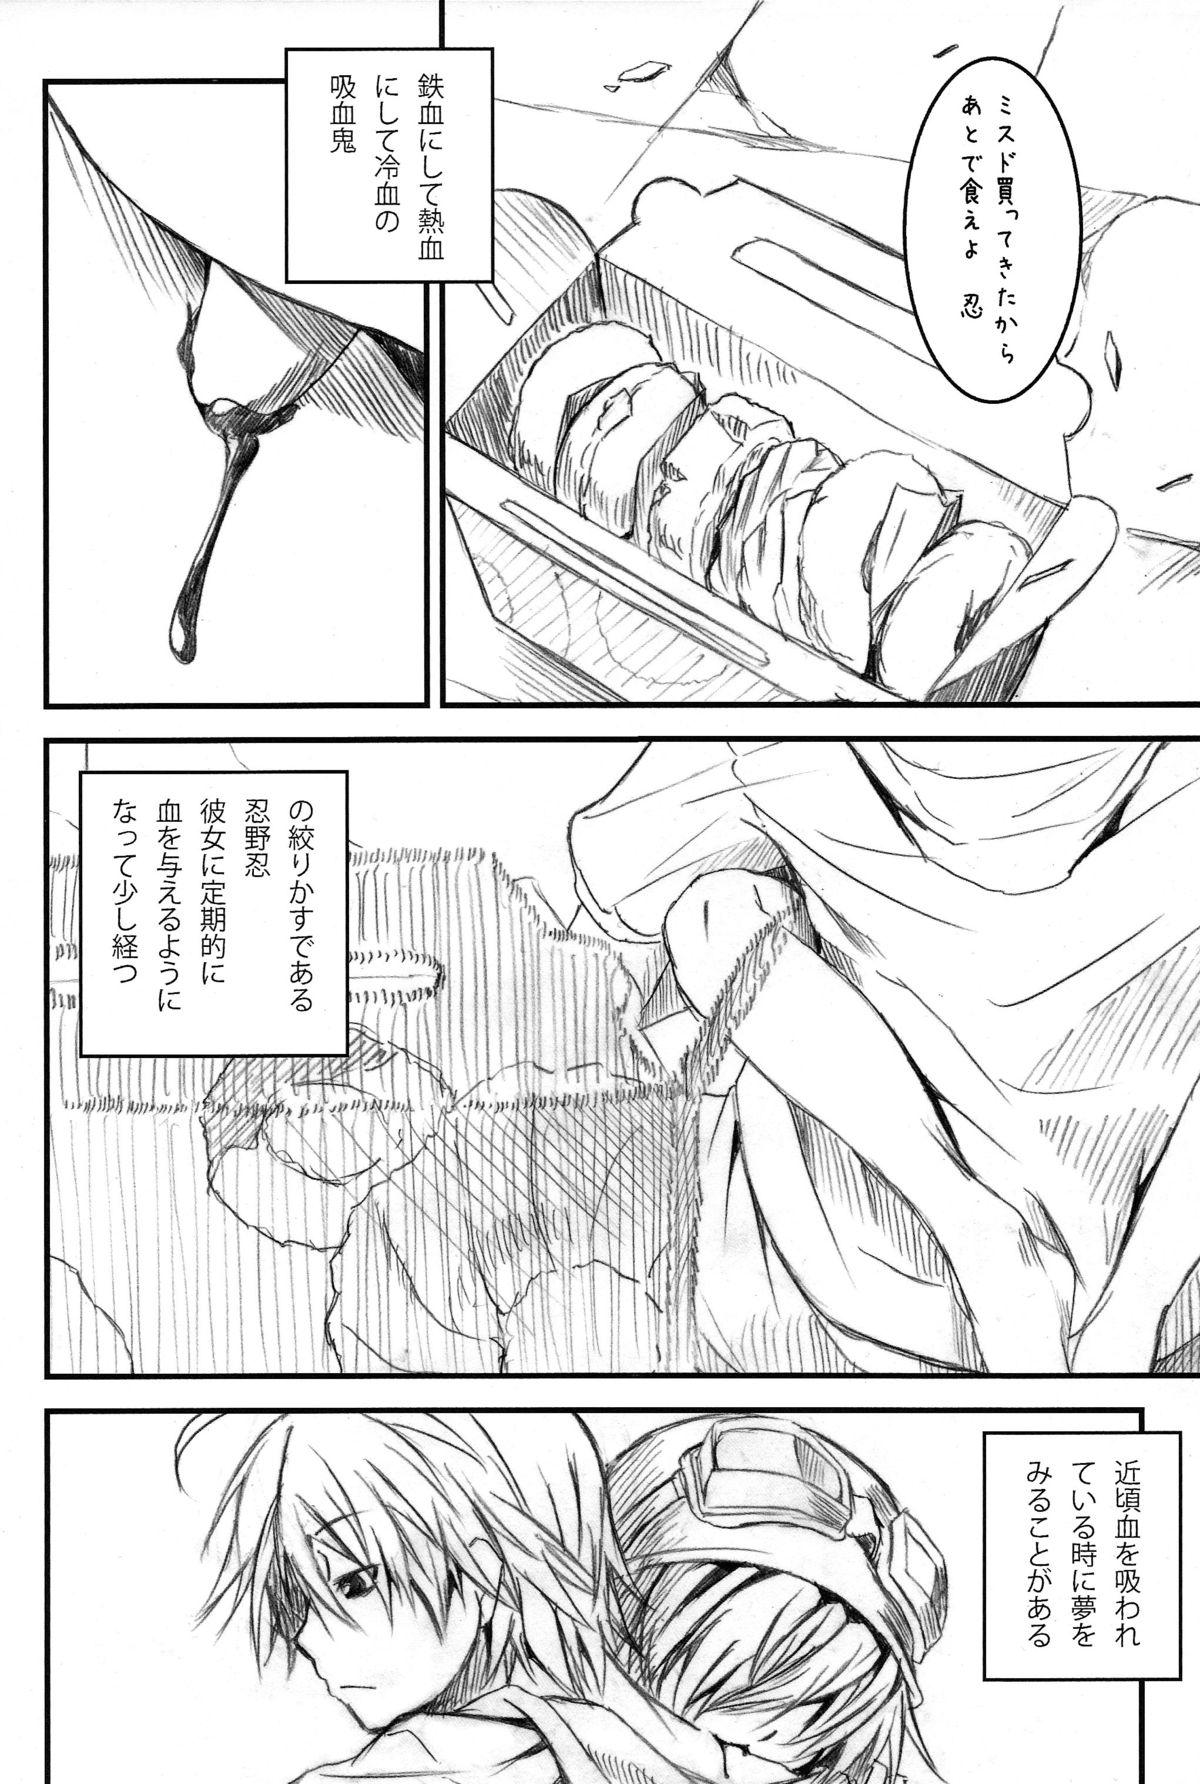 Grosso Vampire Kiss - Bakemonogatari Trap - Page 4